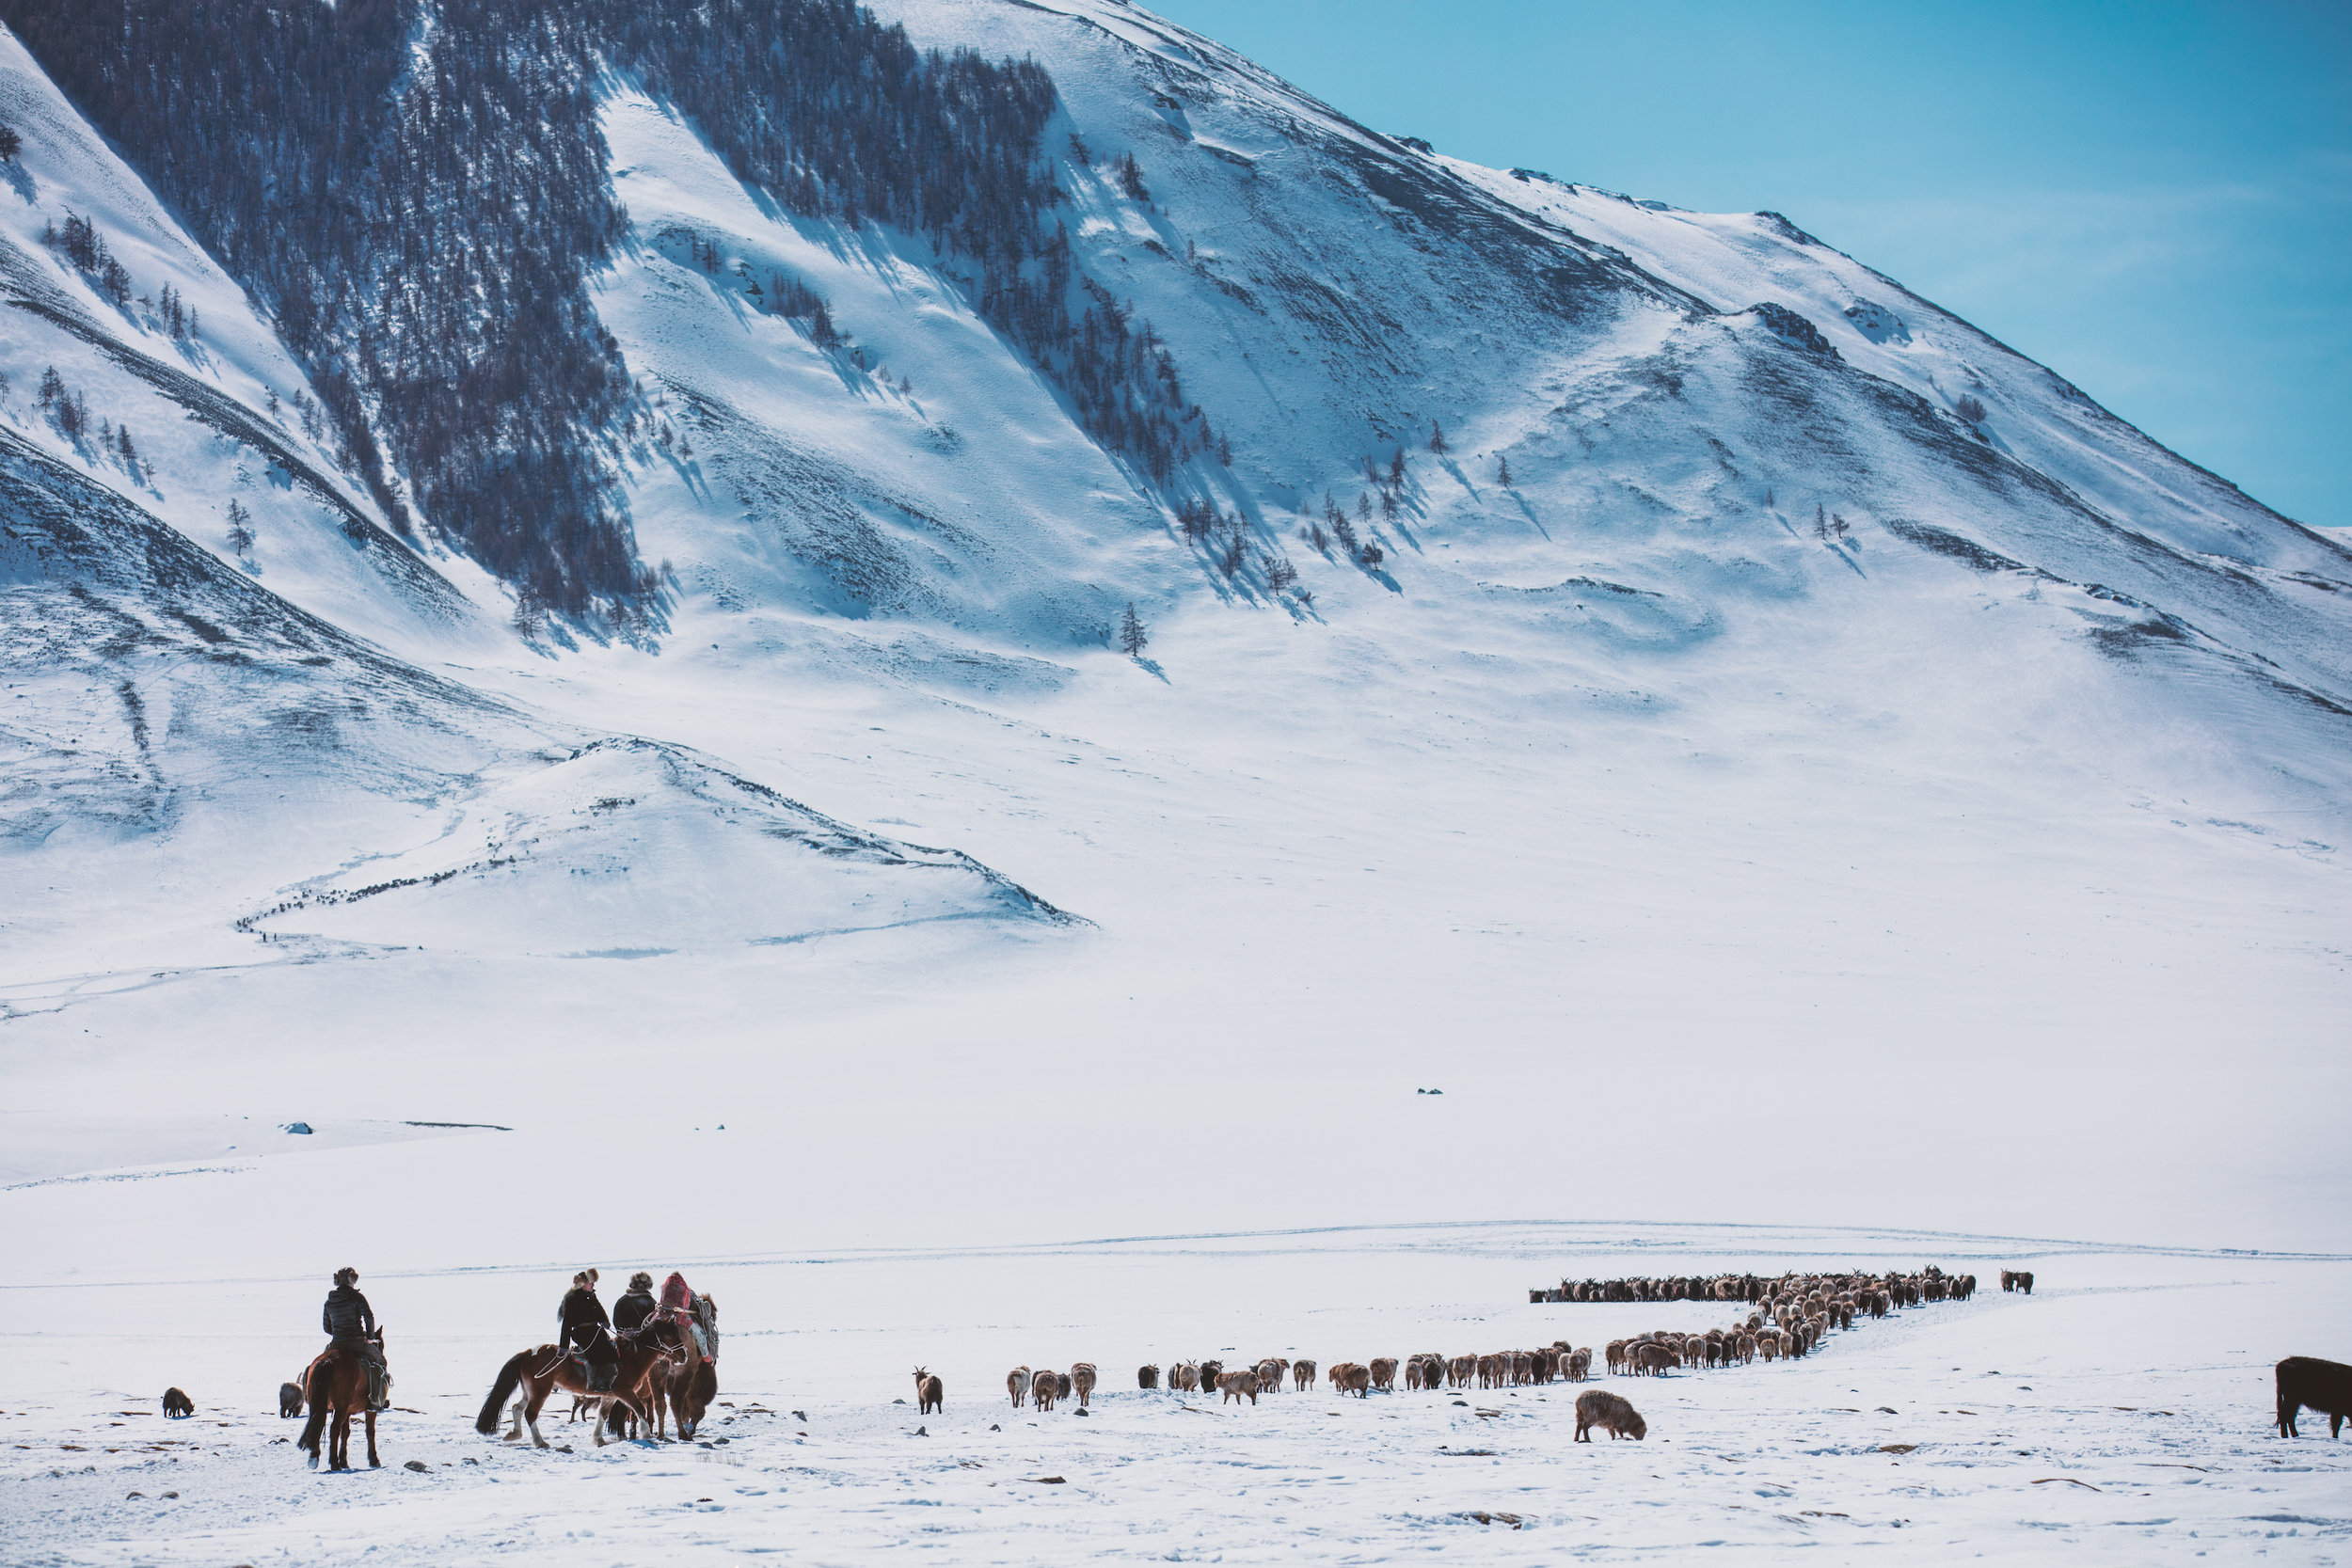 Kazakh nomads on the winter migration,Altai Mountains, Western Mongolia_Boy_Nomad_aAron_Munson.jpg